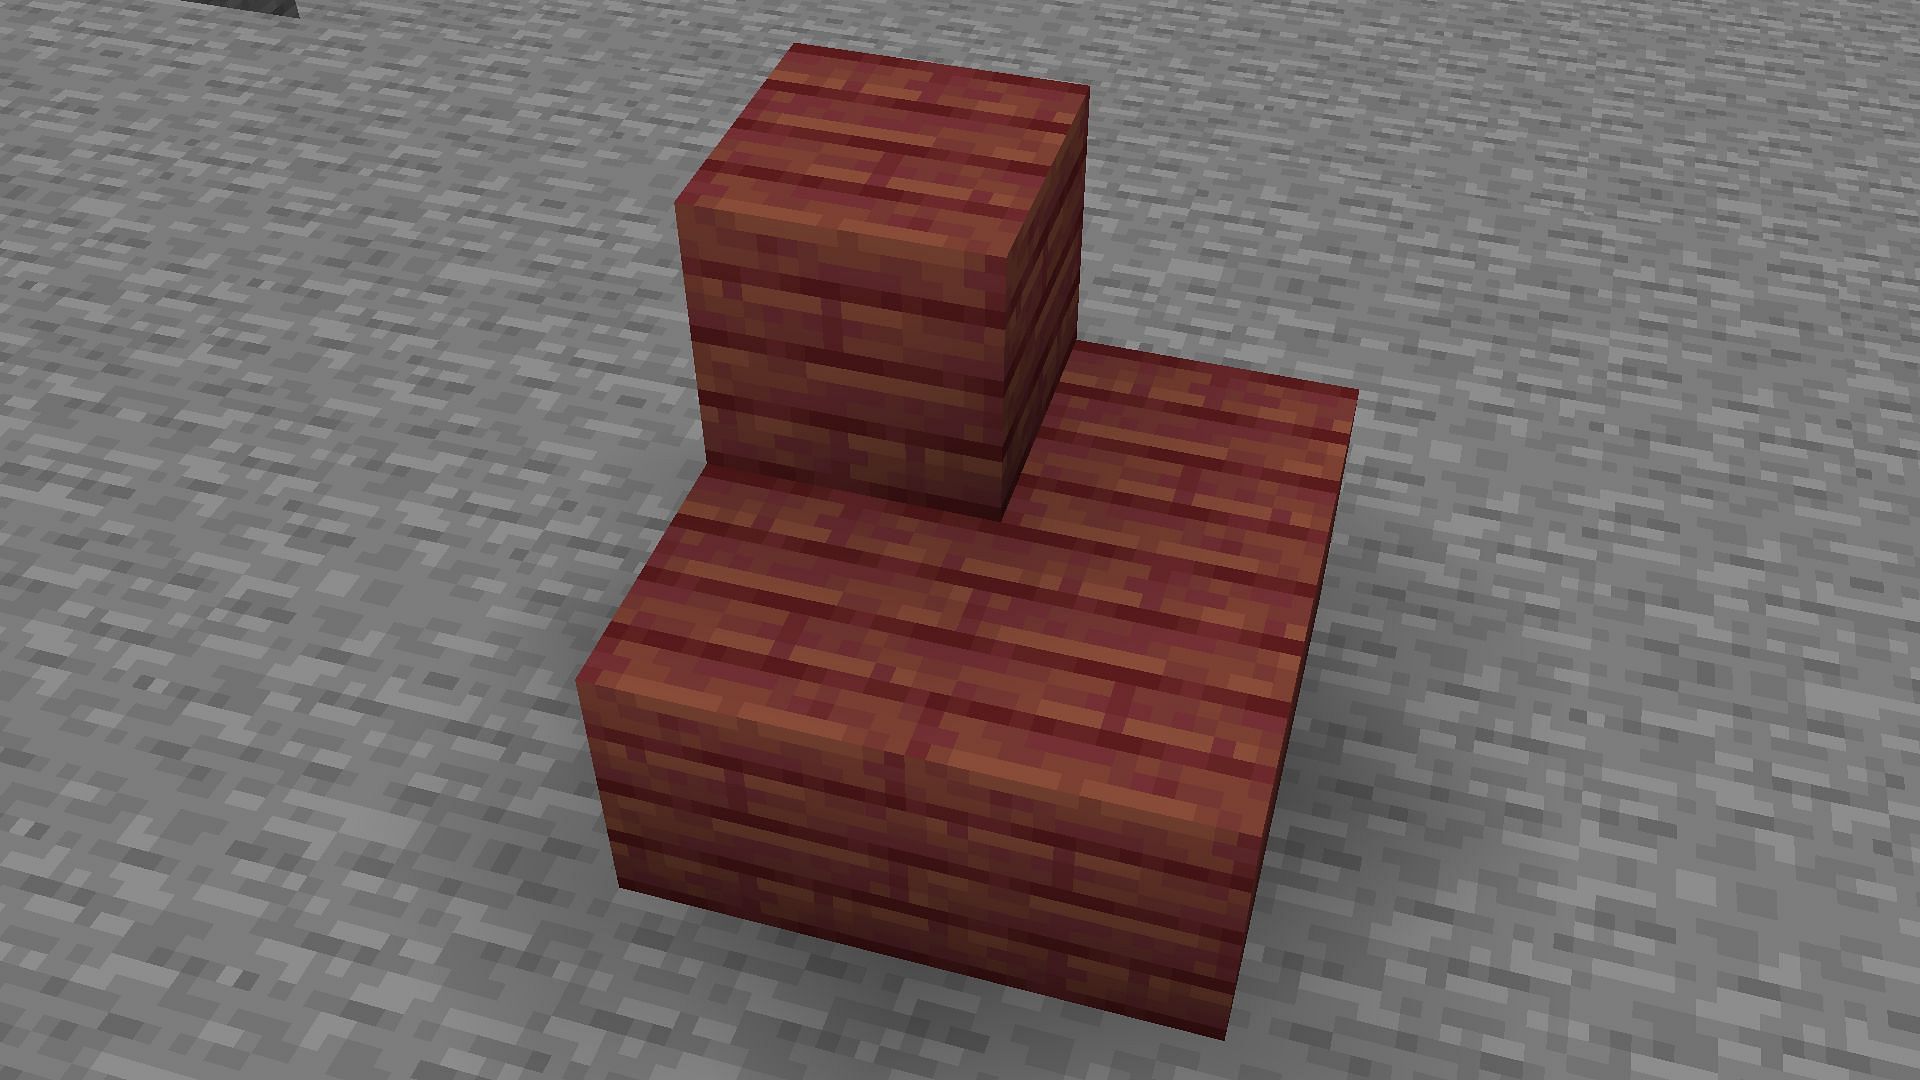 Mangrove Planks in Minecraft (Image via Mojang)